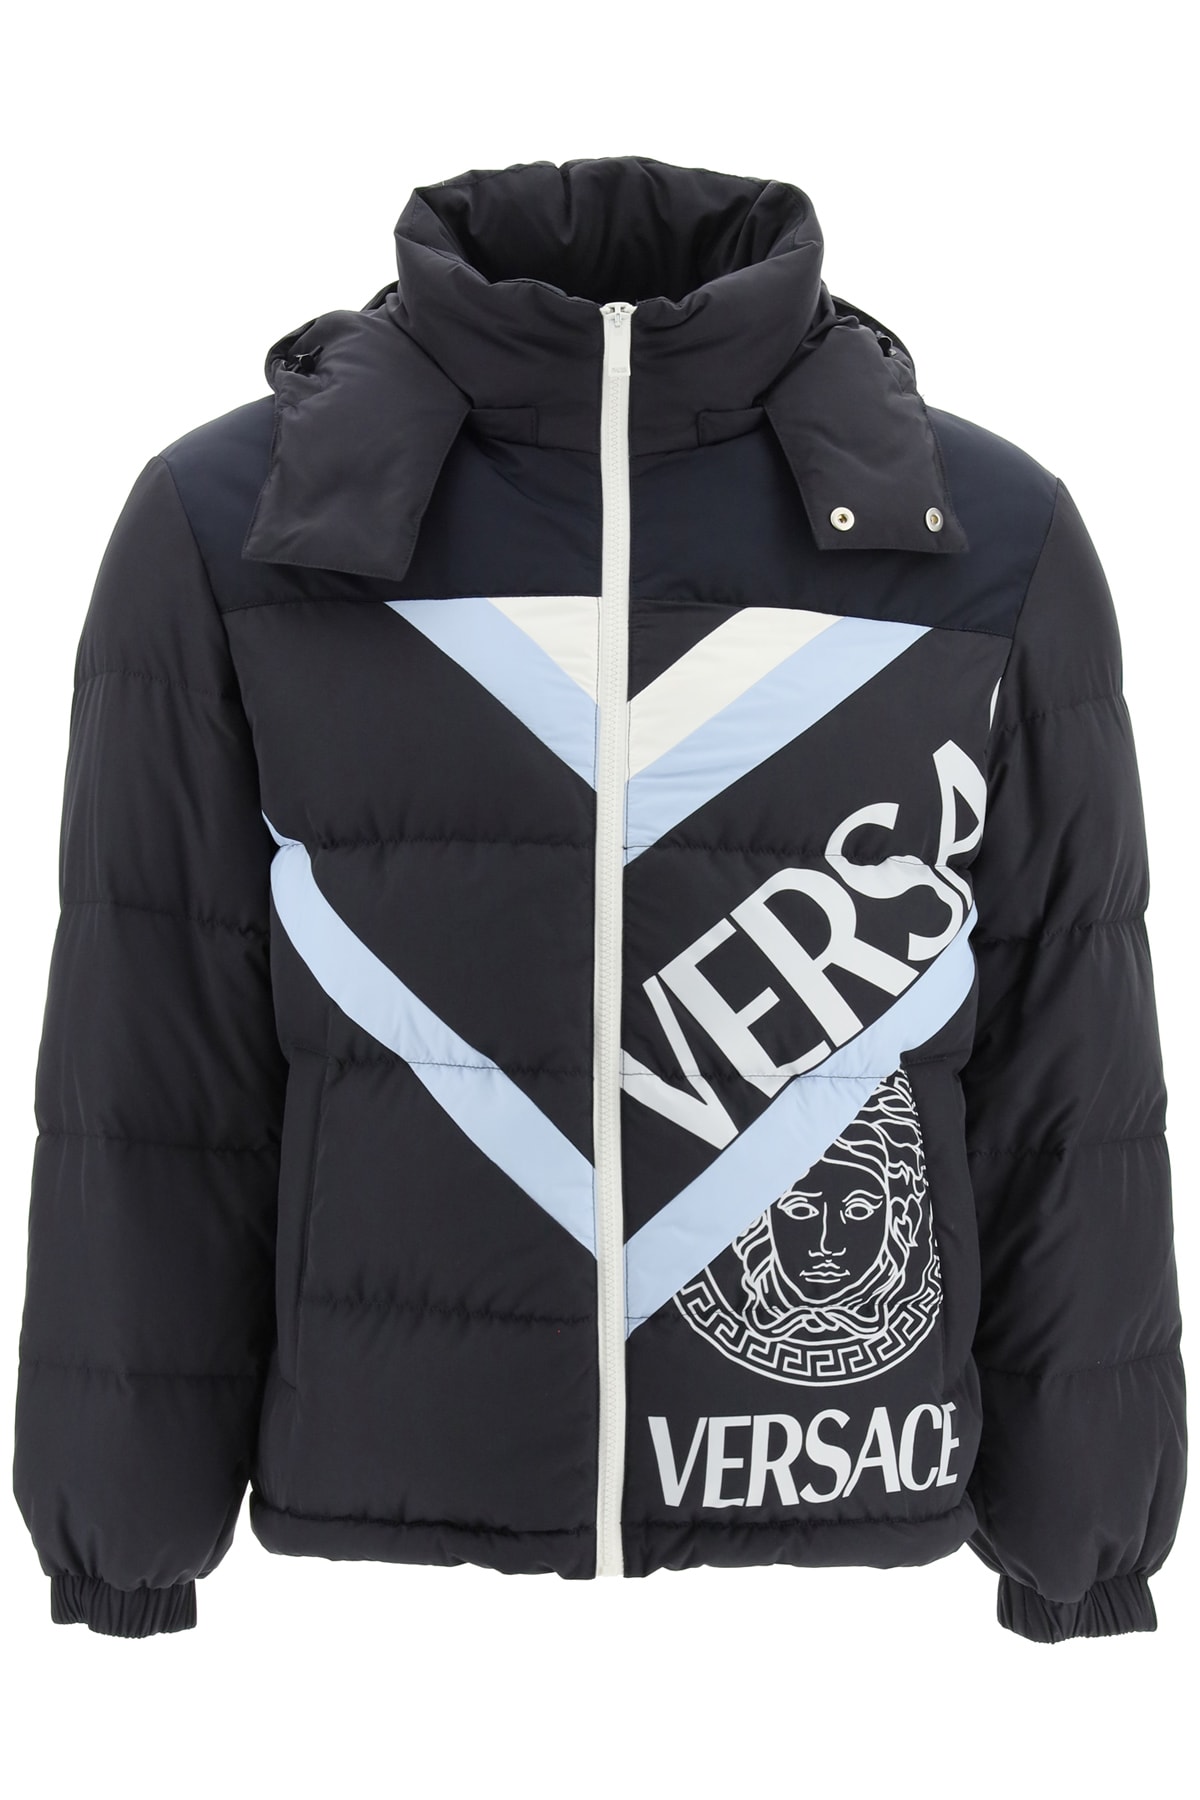 Versace Multilogo Down Jacket